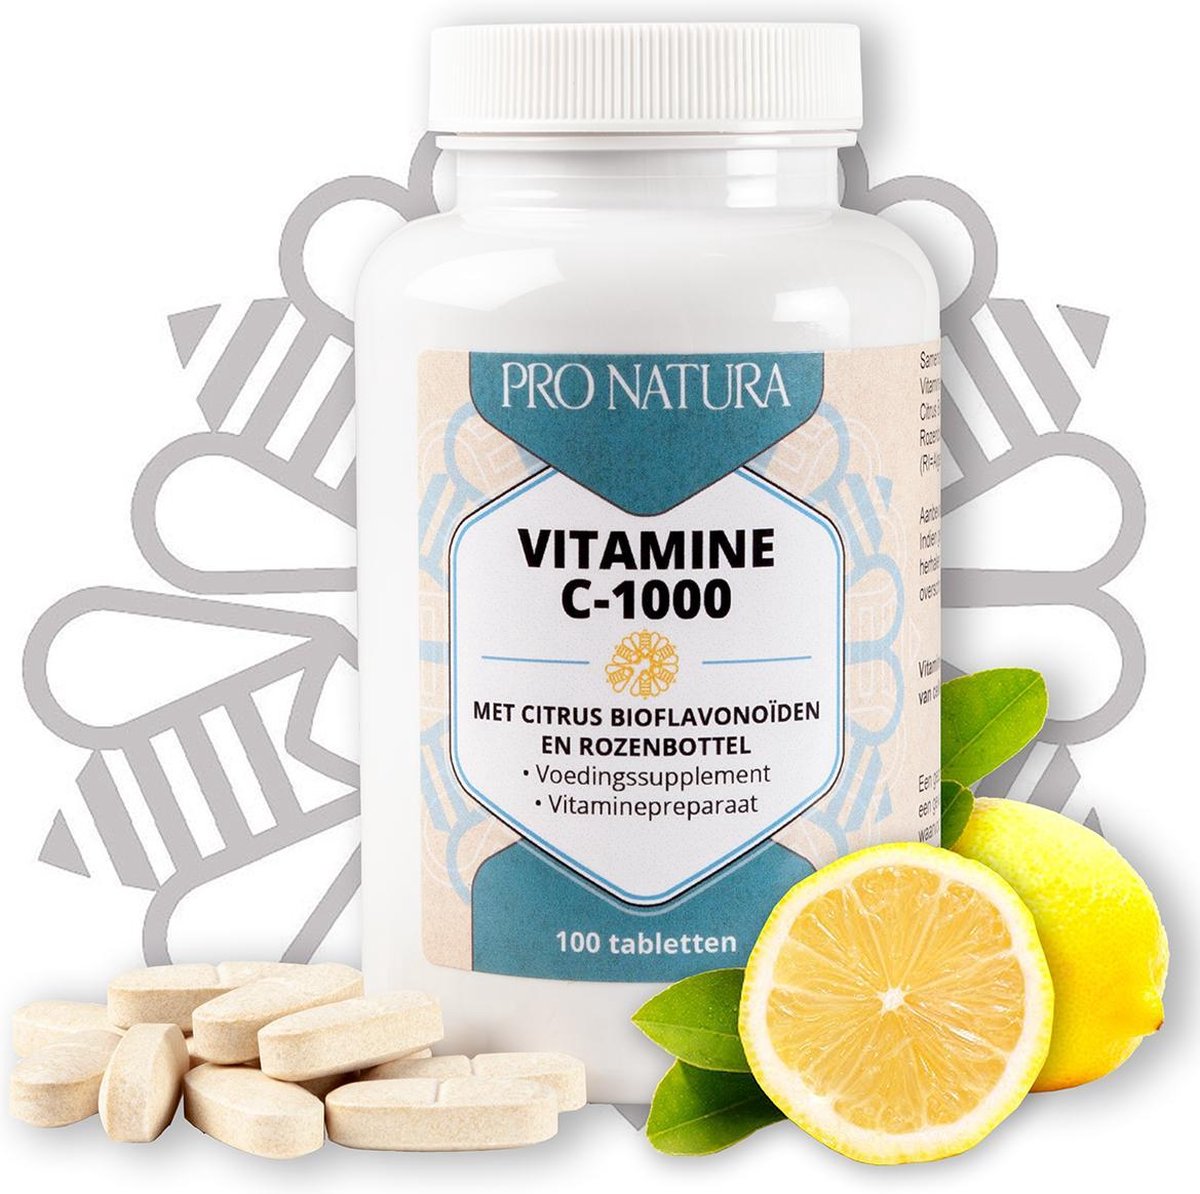 Pro Natura Vitamine C - 100 tabletten van 1000 MG (C-1000) - Voedingssupplement - Vitaminepreparaat